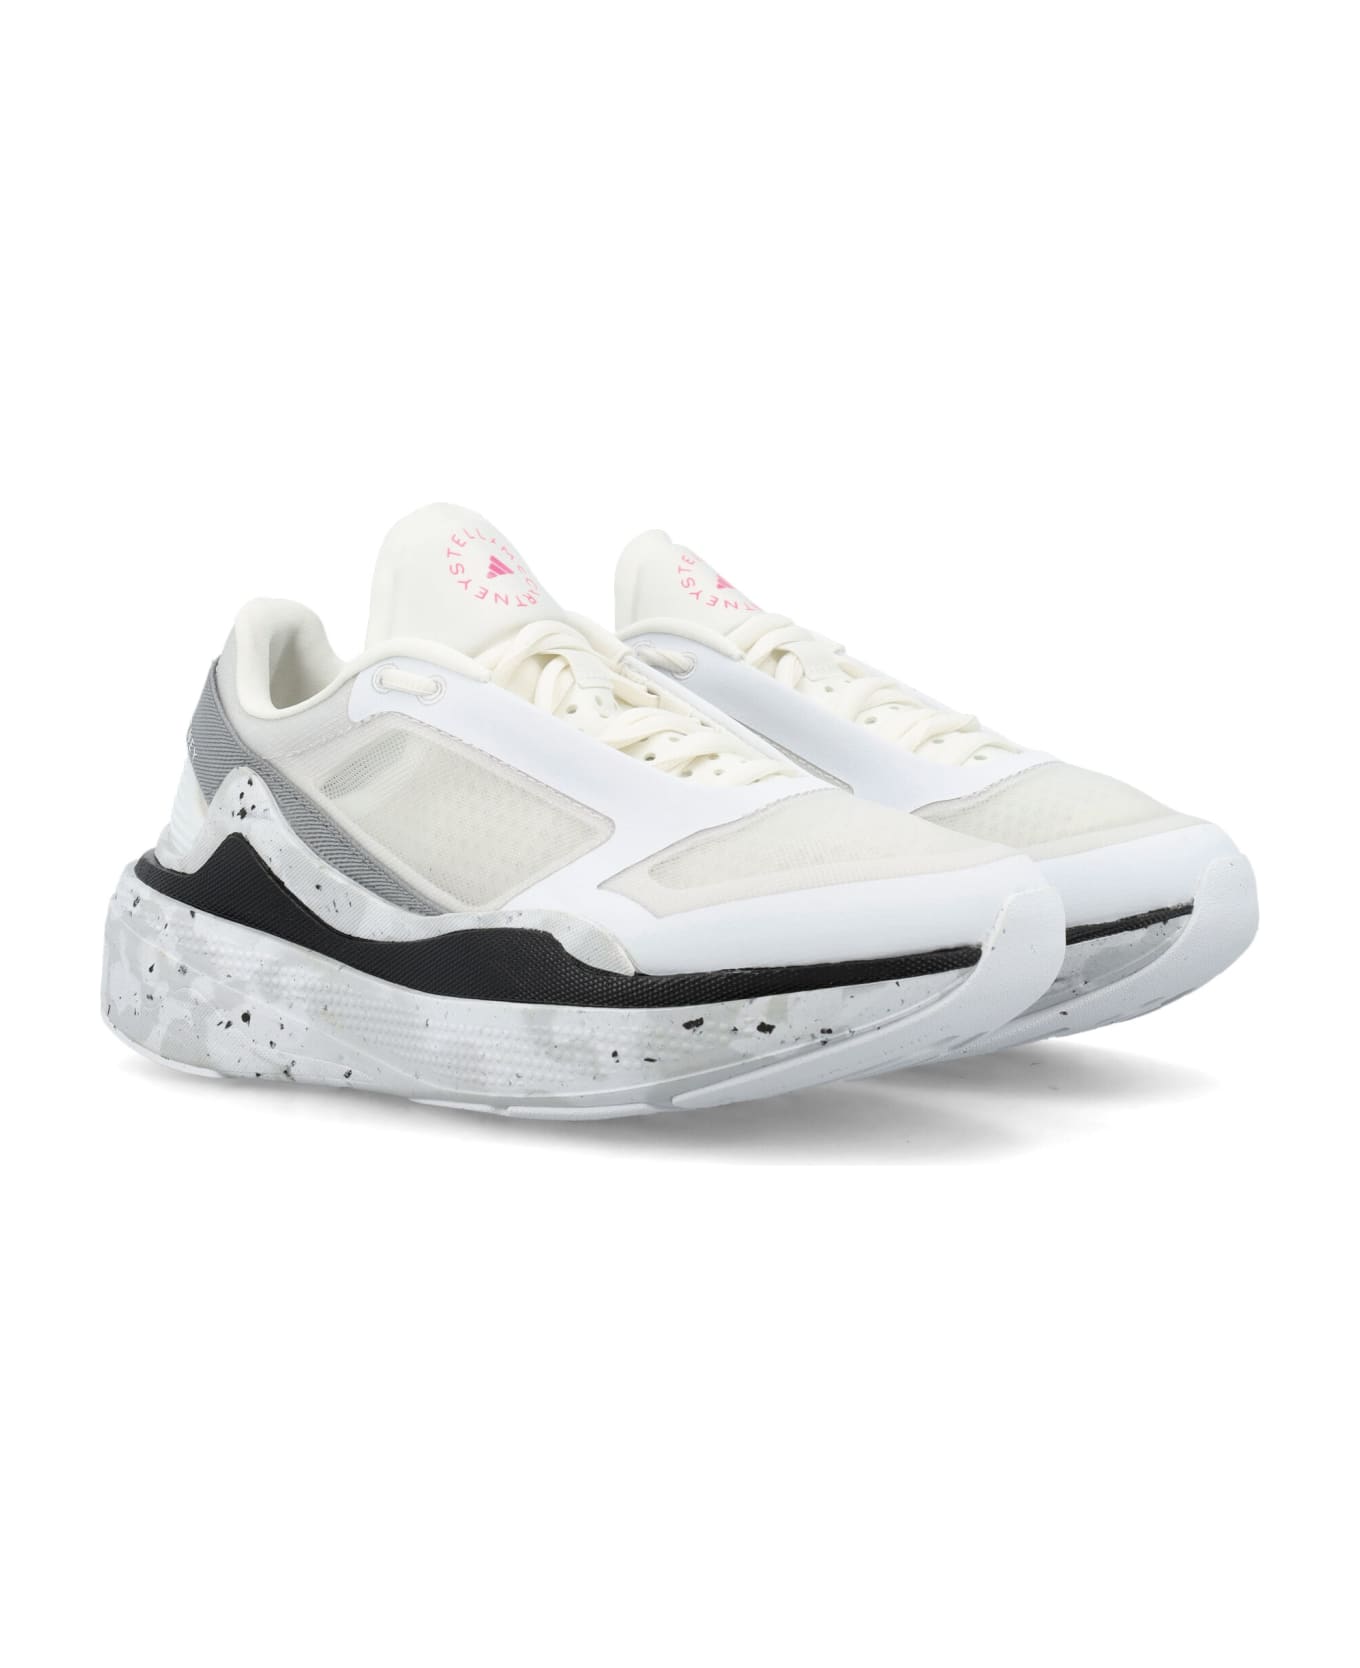 Adidas by Stella McCartney Woman's Eartlight Mesh Running Shoes - WHITE スニーカー